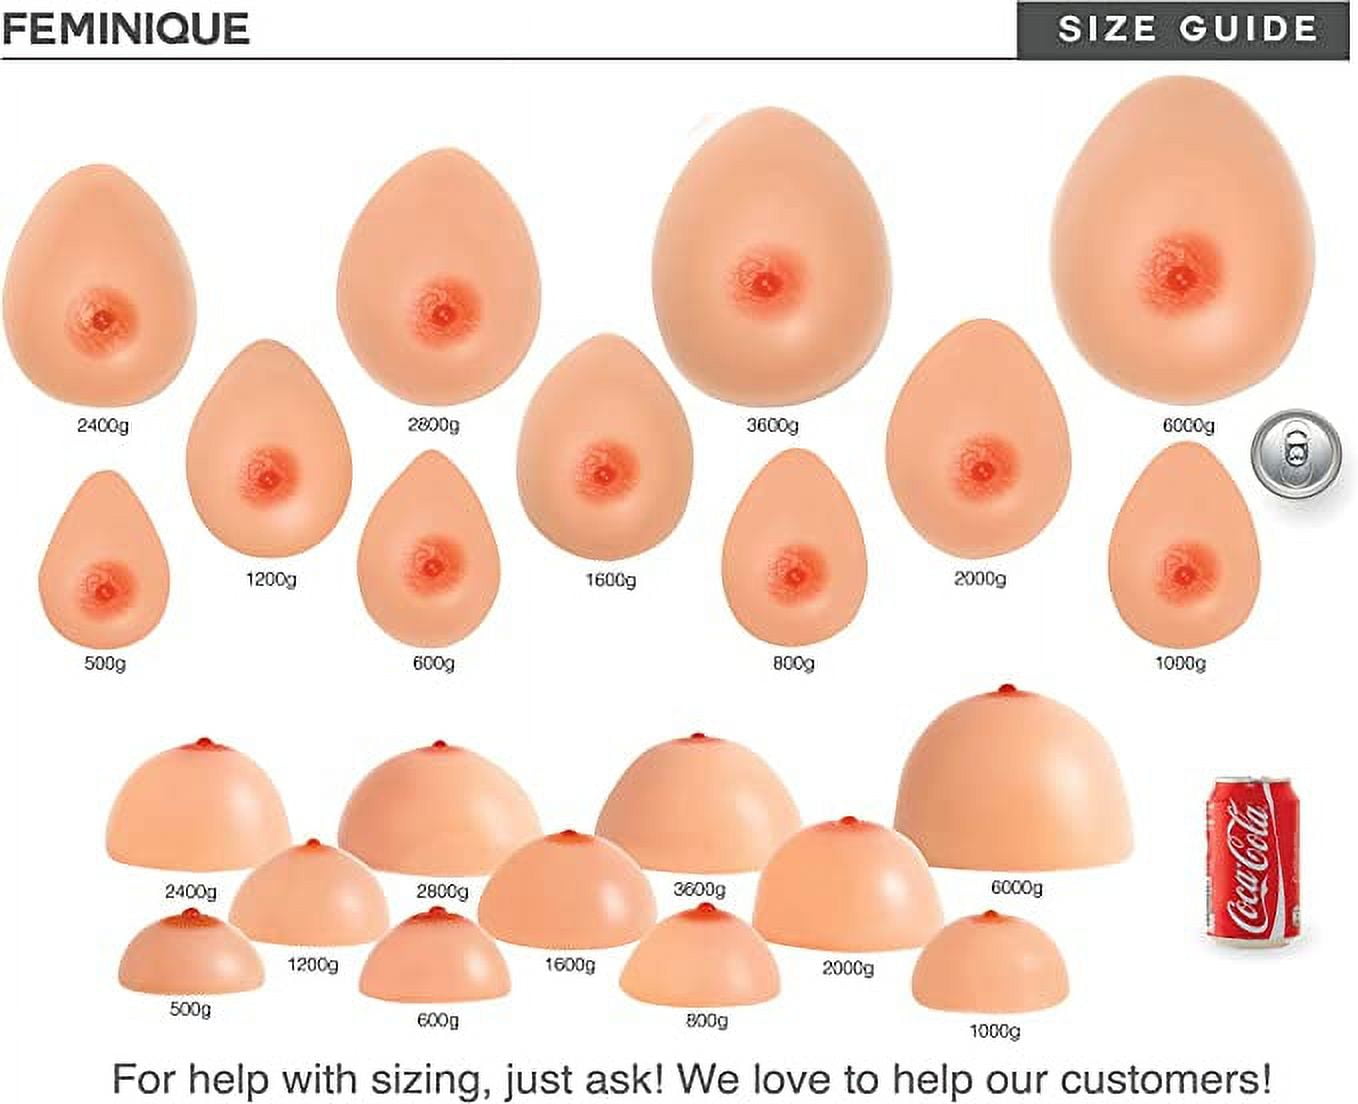 Feminique Silicone Breast Forms - Transgender, Mastectomy, Crossdresser -  DDD Cup (6000g) - Nude Pair 